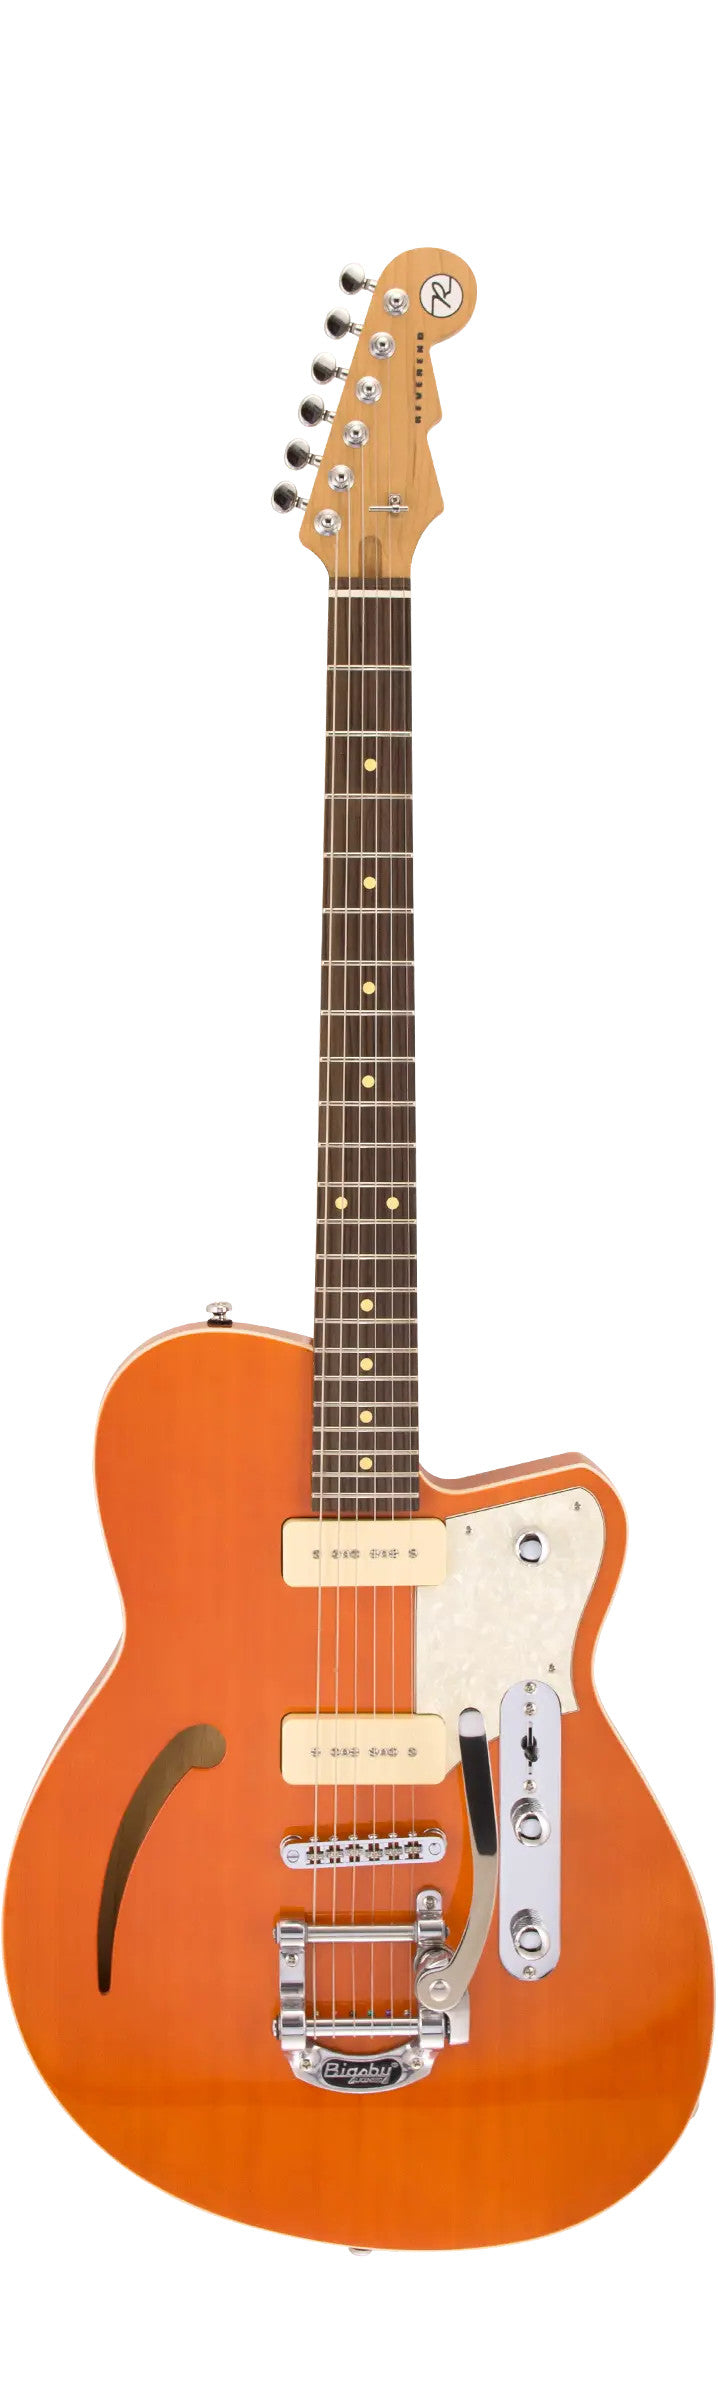 Reverend Club King 290 Guitar - Rock Orange Limited Edition